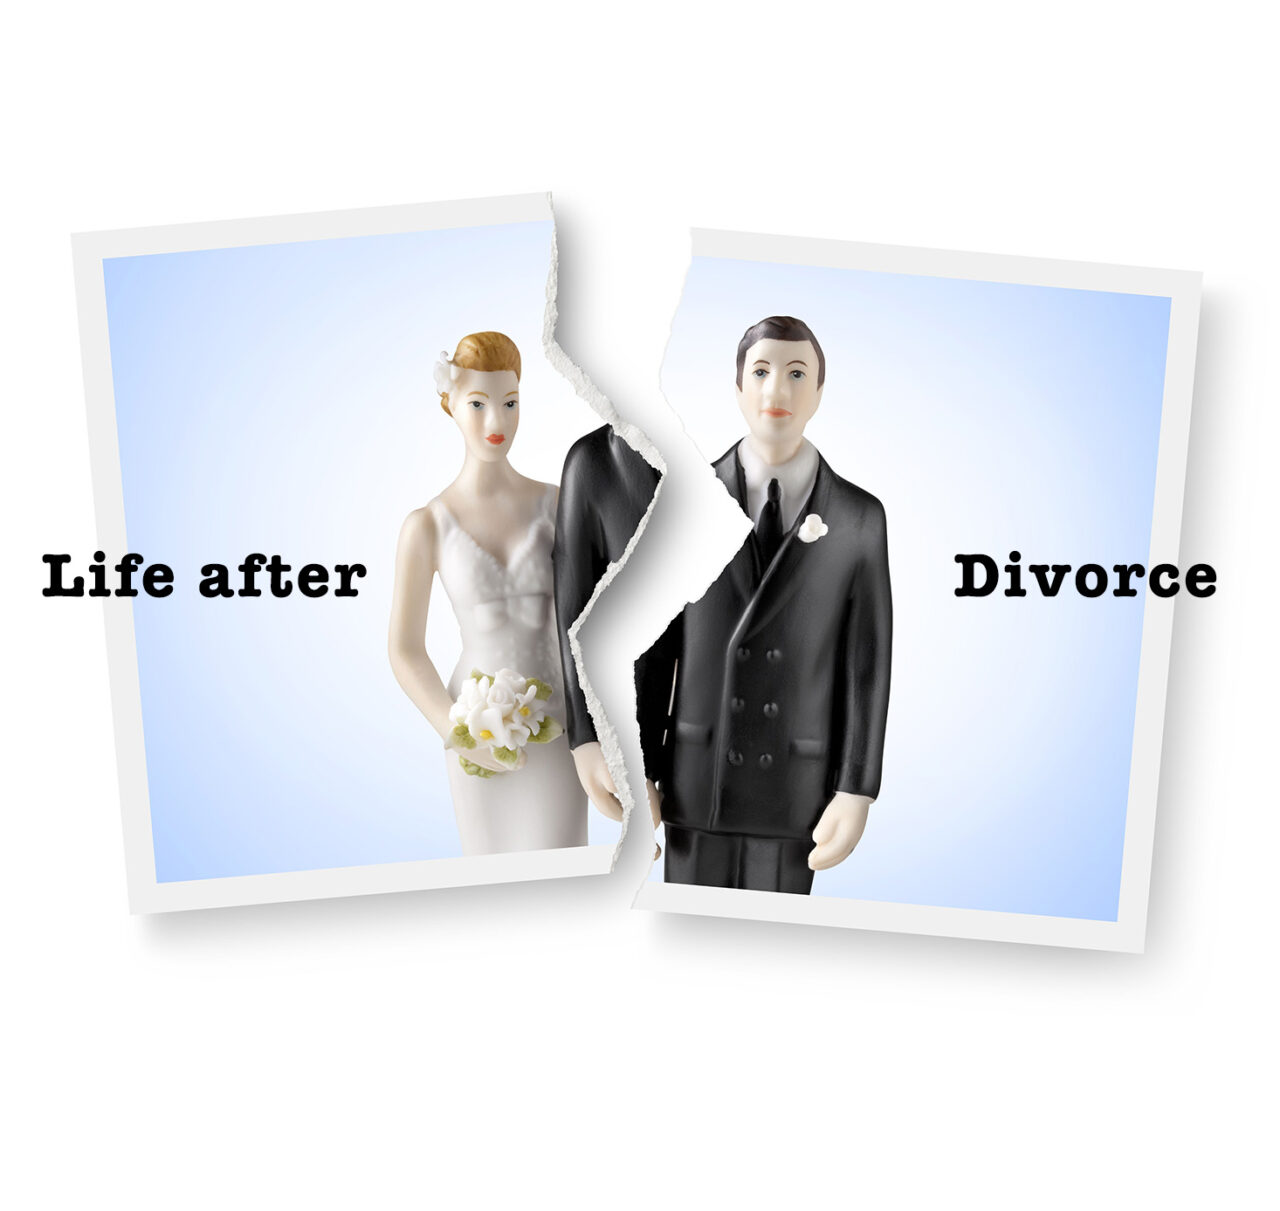 divorce-torn-photograph-of-wedding-cake-topper-royalty-free-image-1589213661-1-1280x1211.jpg